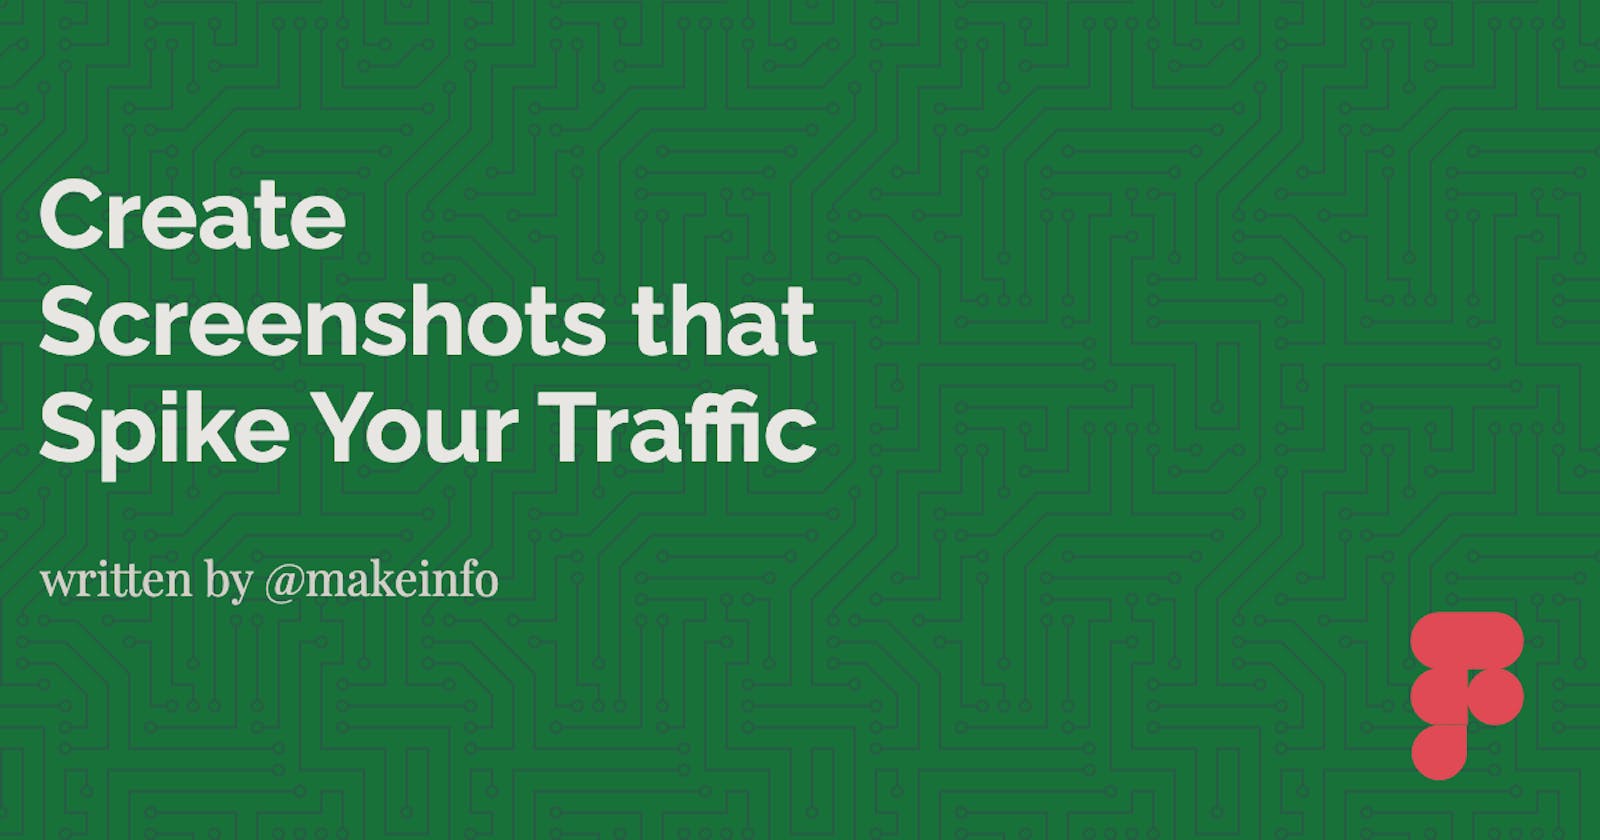 How to Create Beautiful Screenshots that Spike Your Traffic?